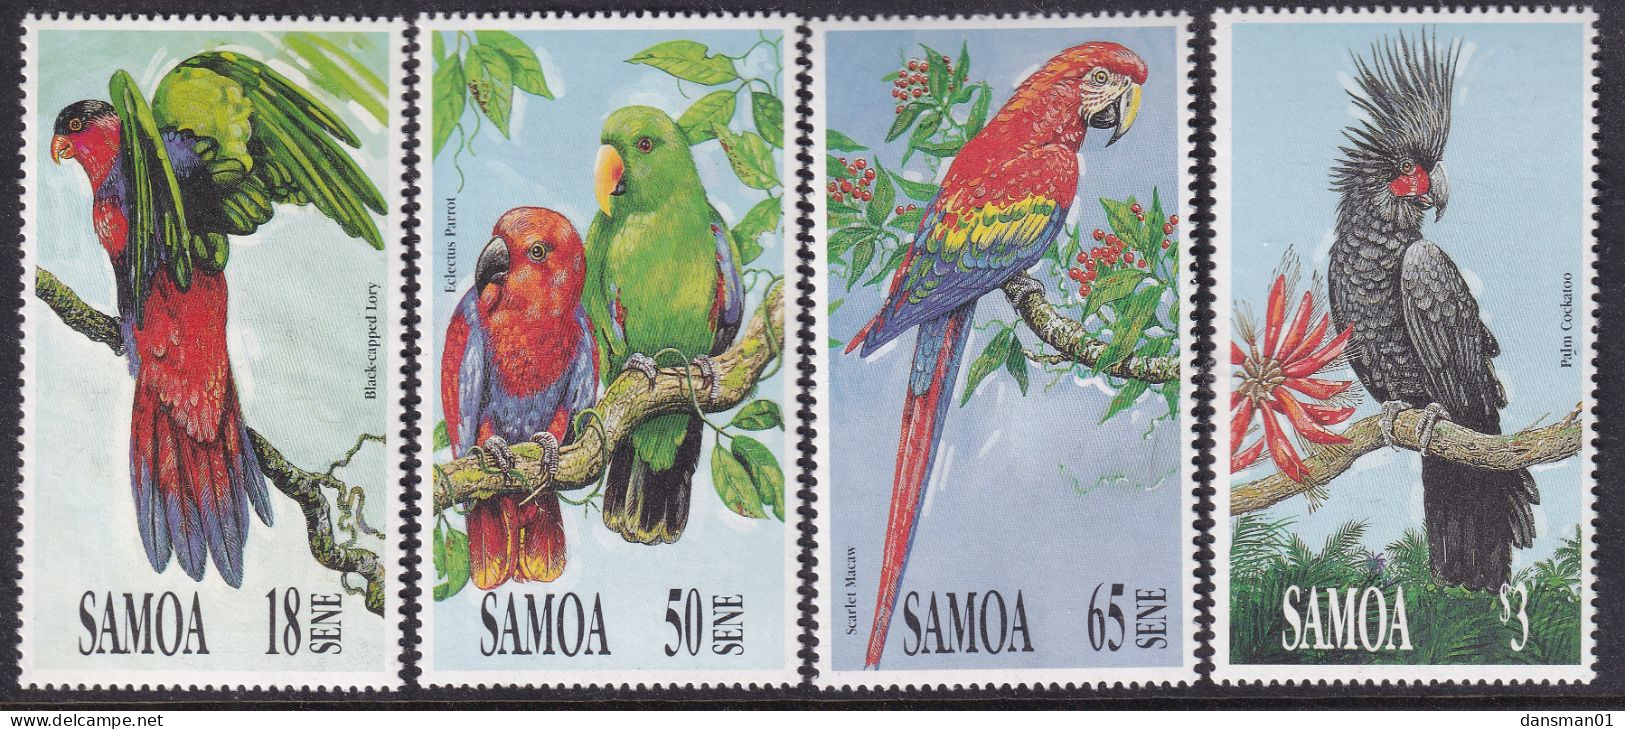 Samoa 1991 Parrots Sc 786-89 Mint Never Hinged - Samoa